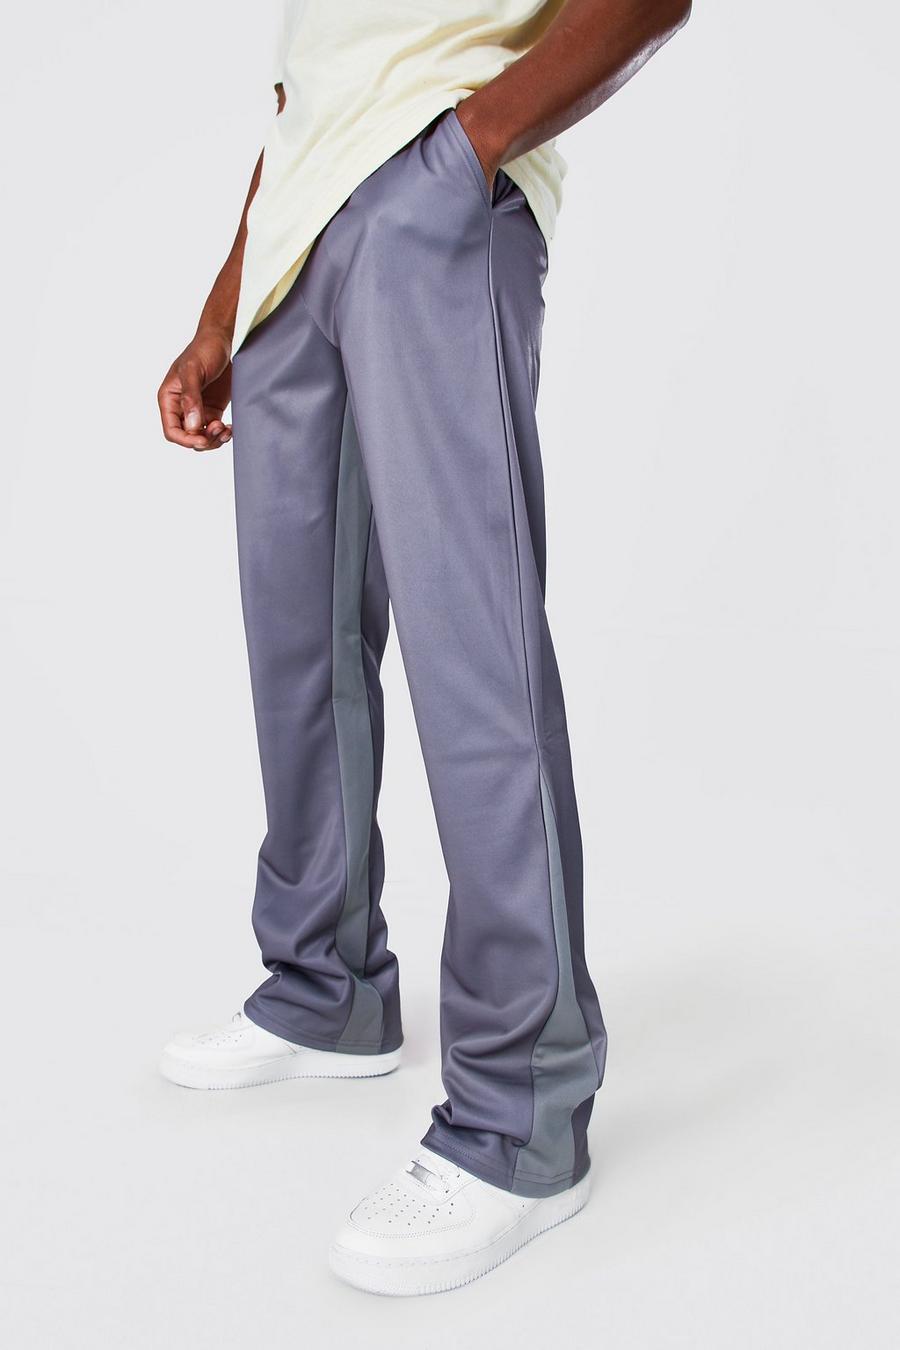 Pantalón deportivo MAN Original de tejido por urdimbre con refuerzos, Charcoal grey image number 1